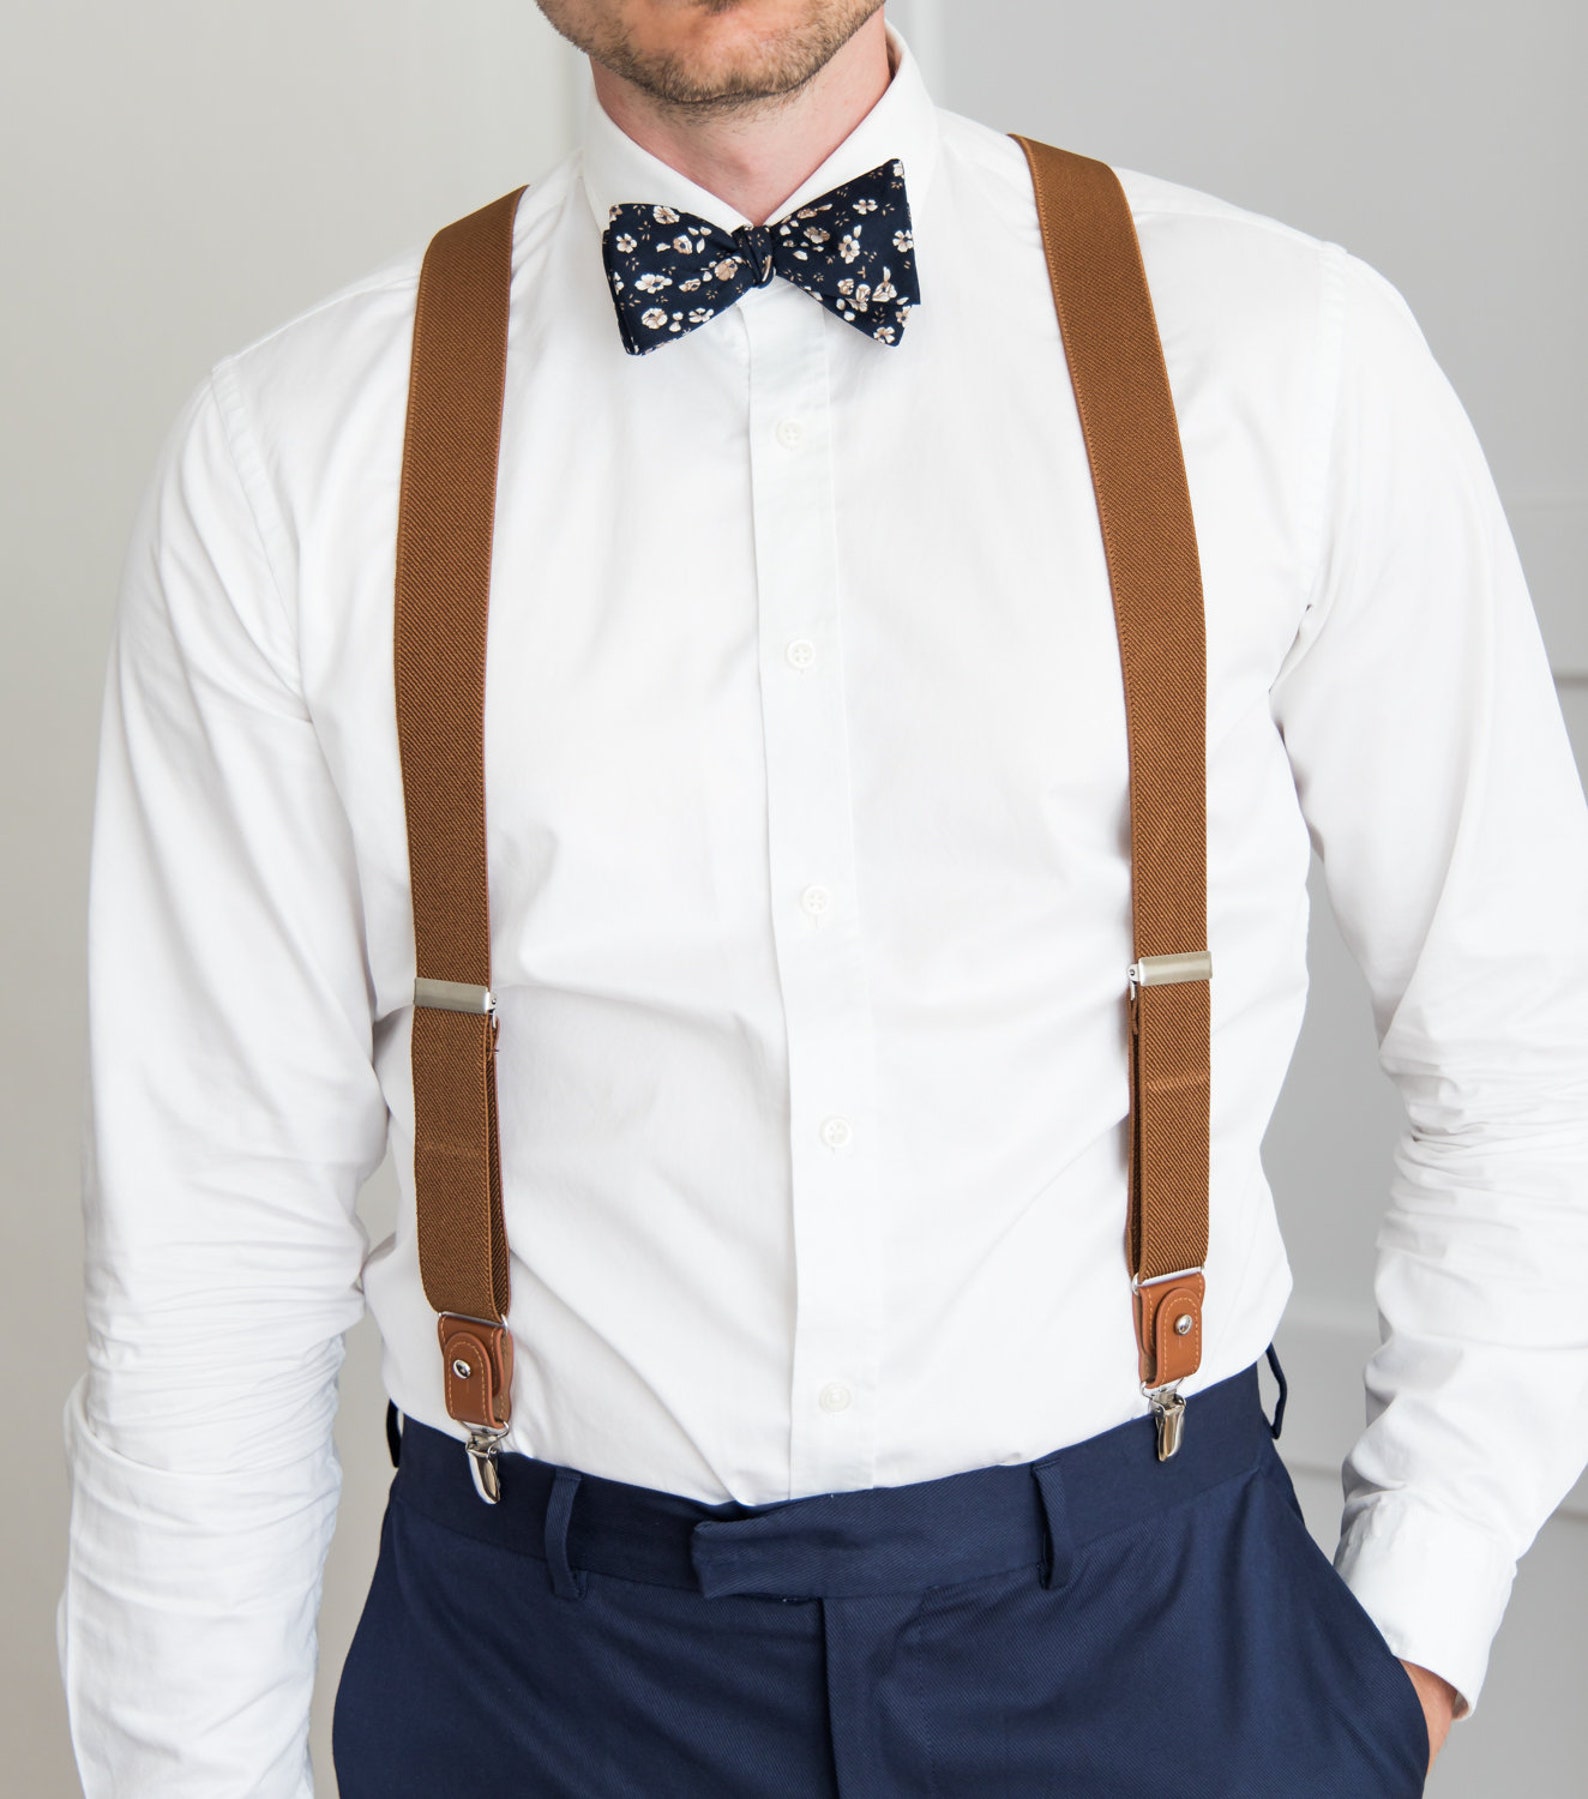 Brown Suspenders for Men Button Suspenders Wedding - Etsy